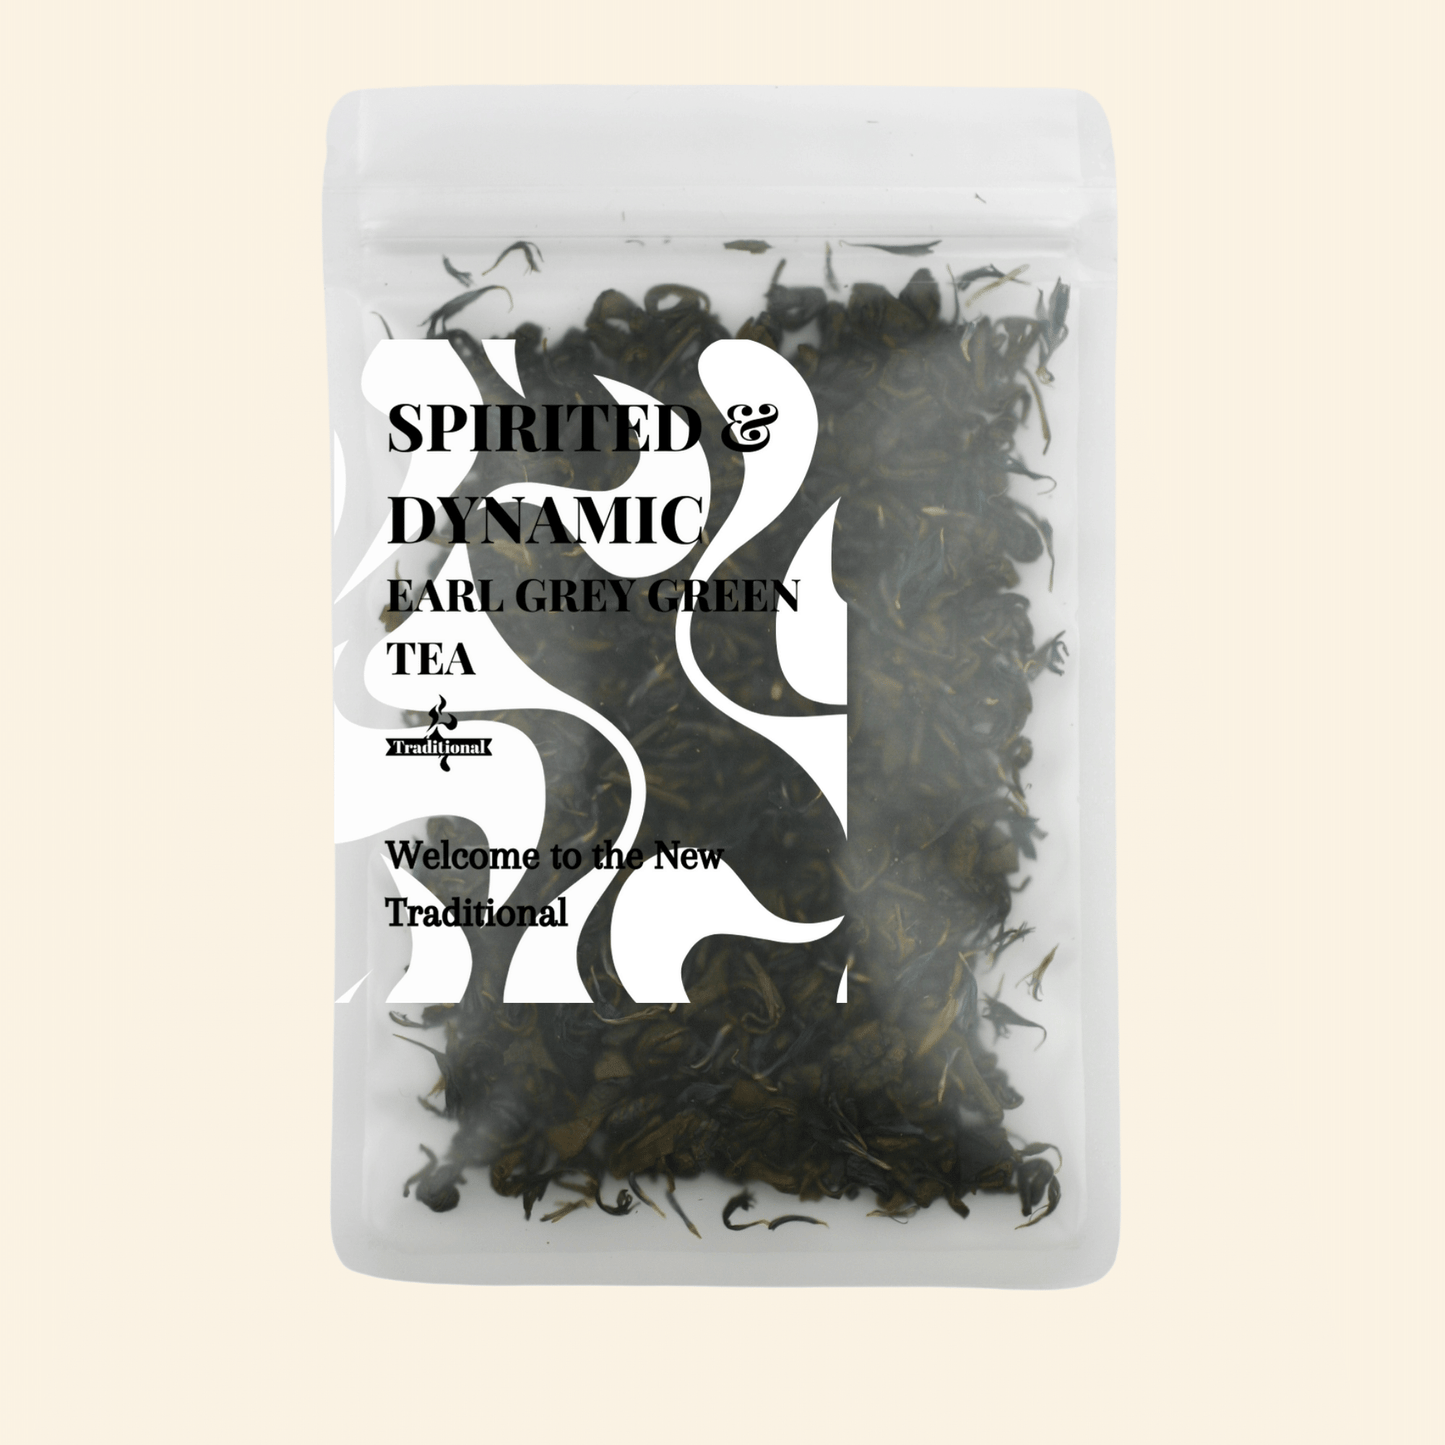 Spirited & Dynamic. Earl Grey Green Tea. Details ->